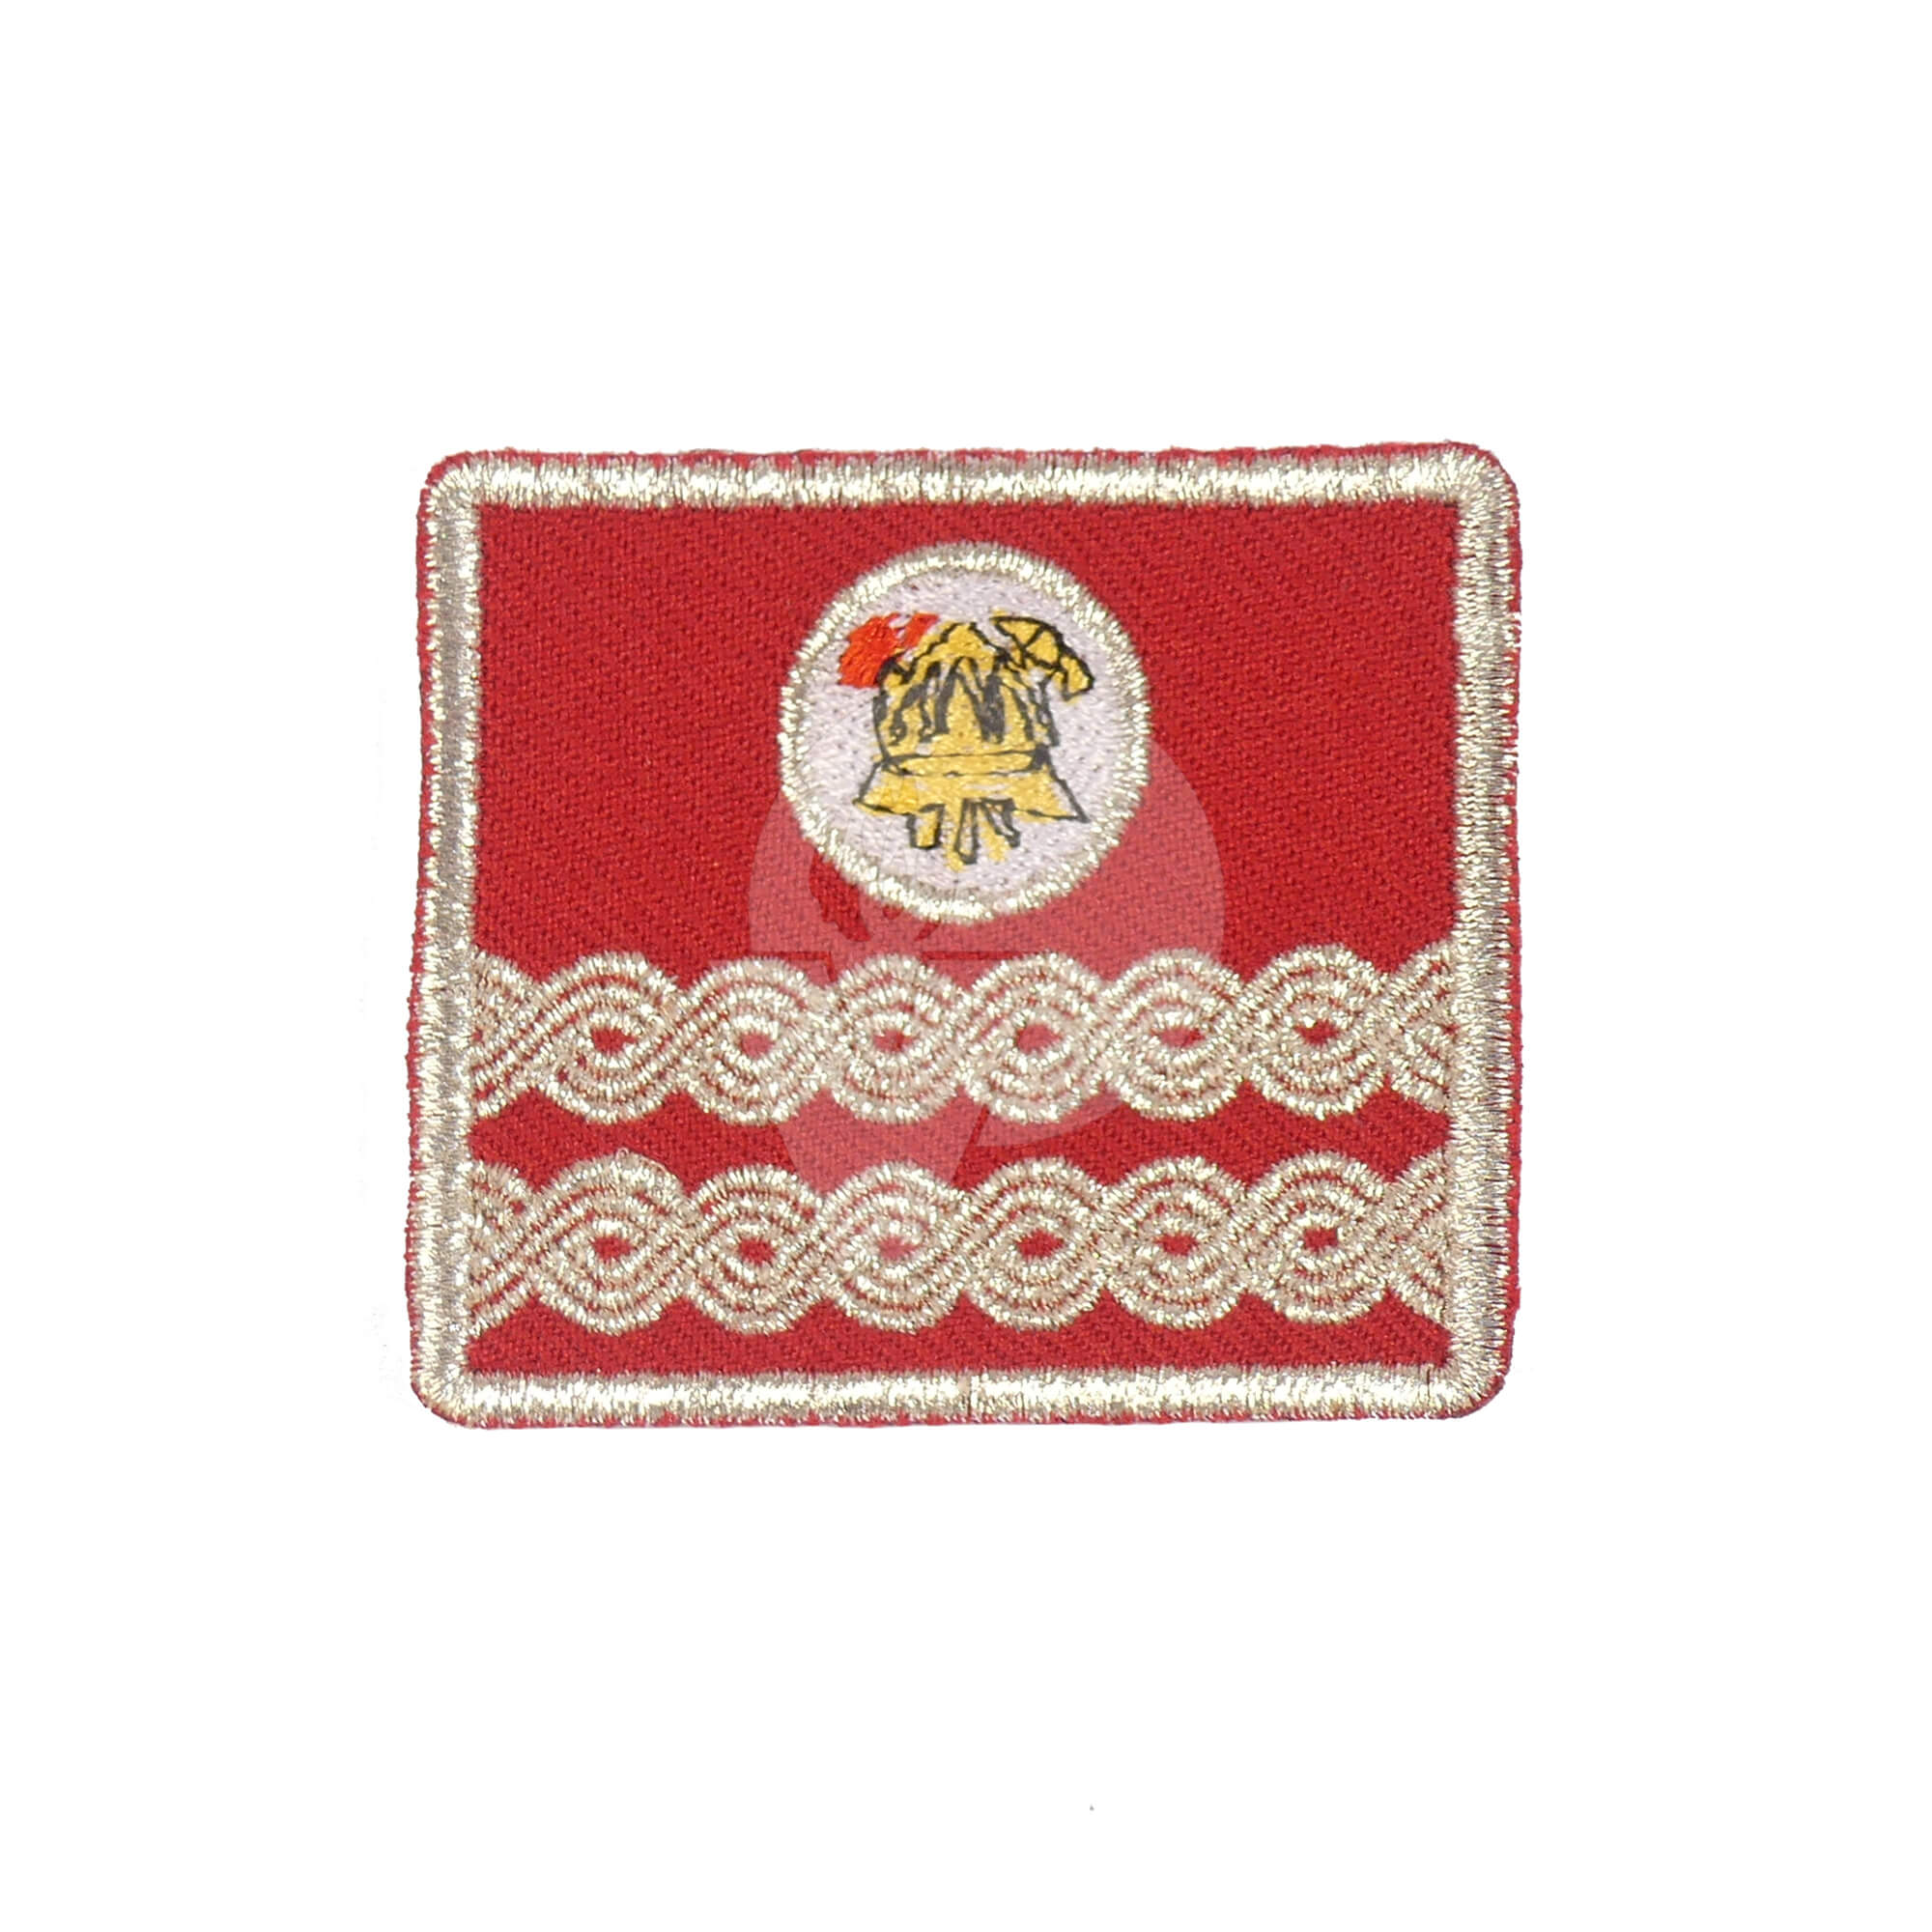 Firefighter Emblem for Work Suit, County Deputy Commander